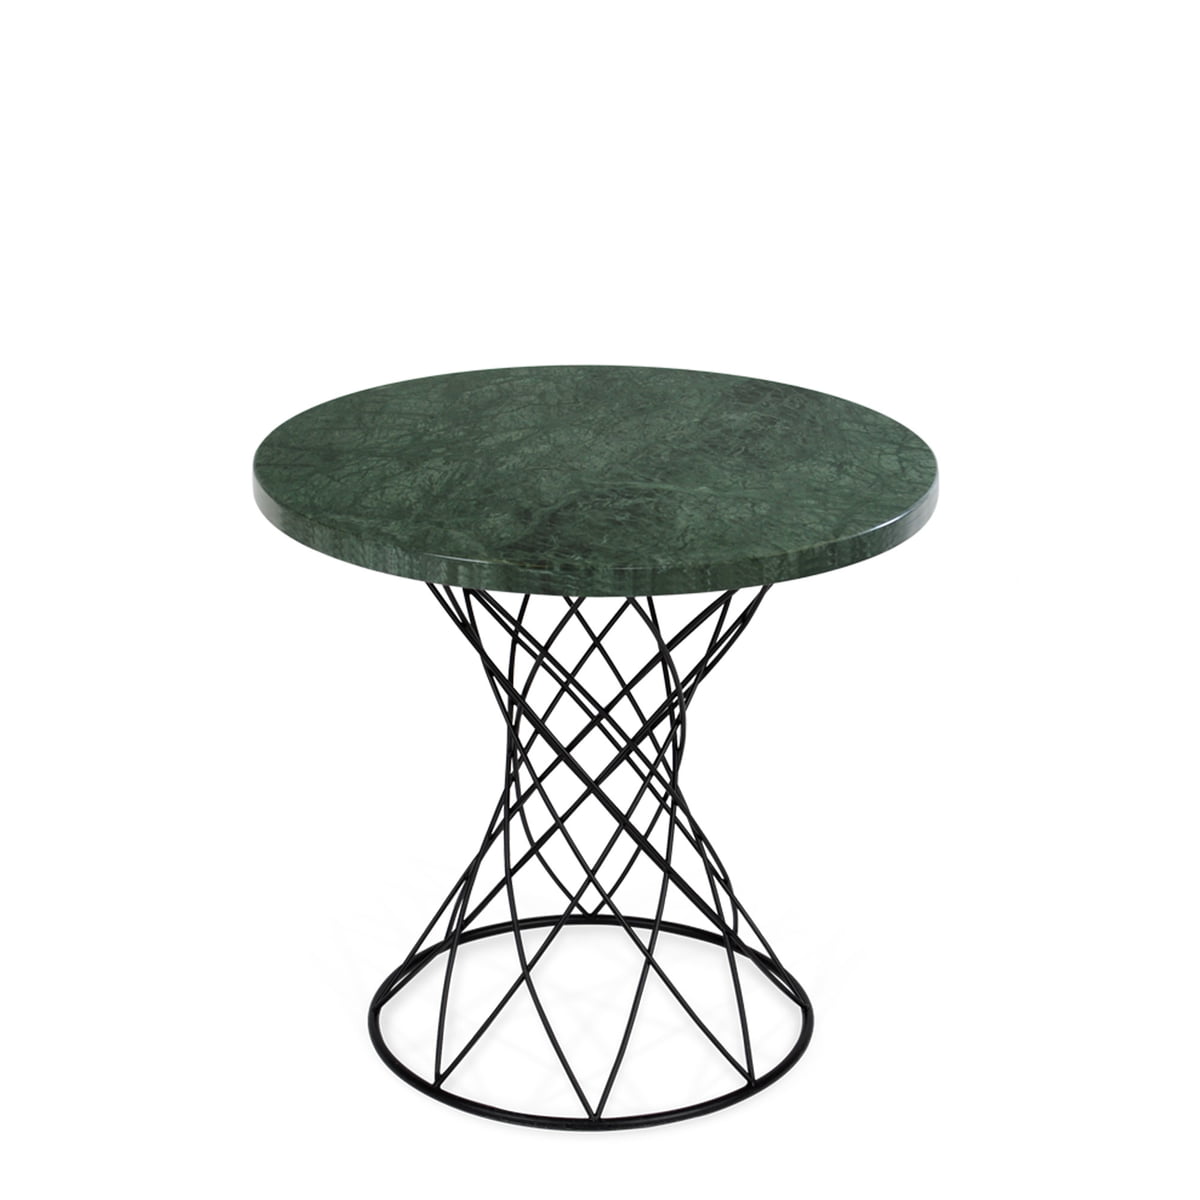 Ox Denmarq - Merge Table d'appoint, Ø 40 x H 40 cm, noir / vert marbre